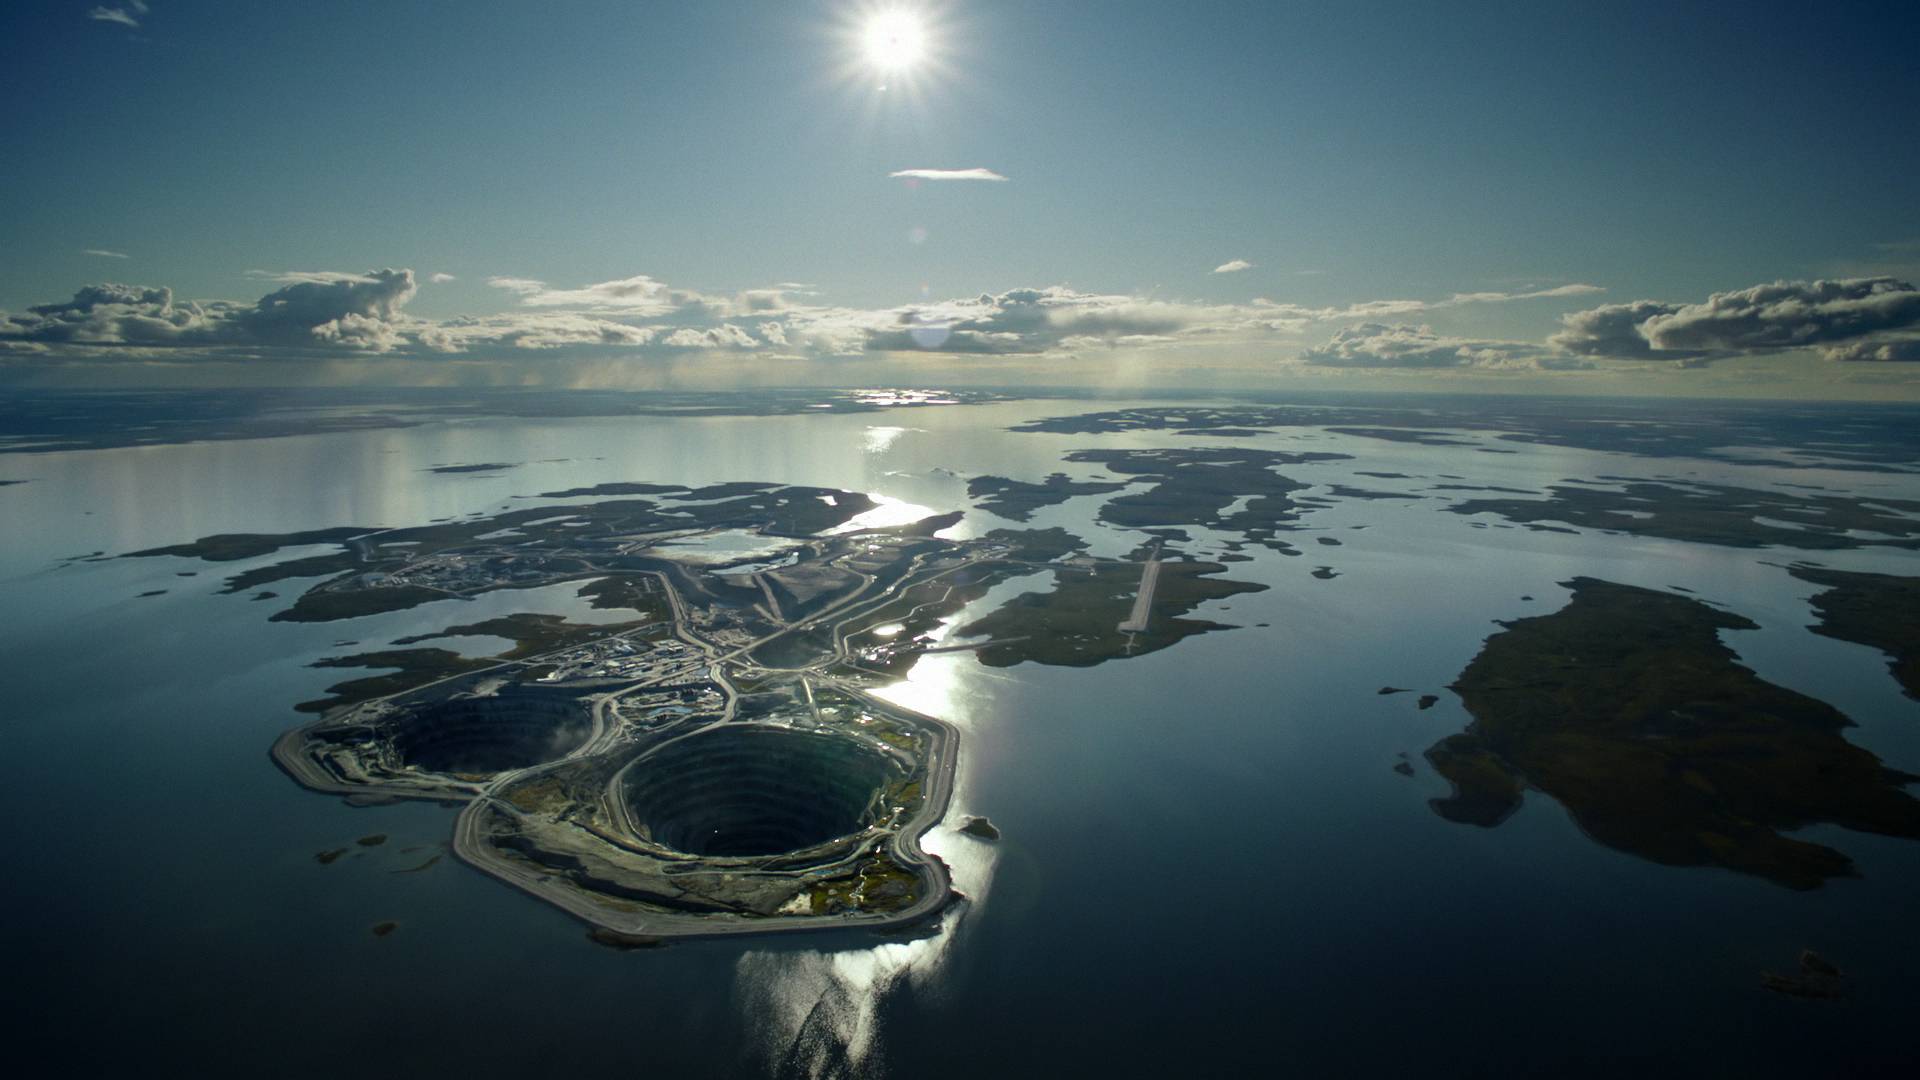  diavik diamond mine canada, inception, a hole within an island within a lake, beautiful,